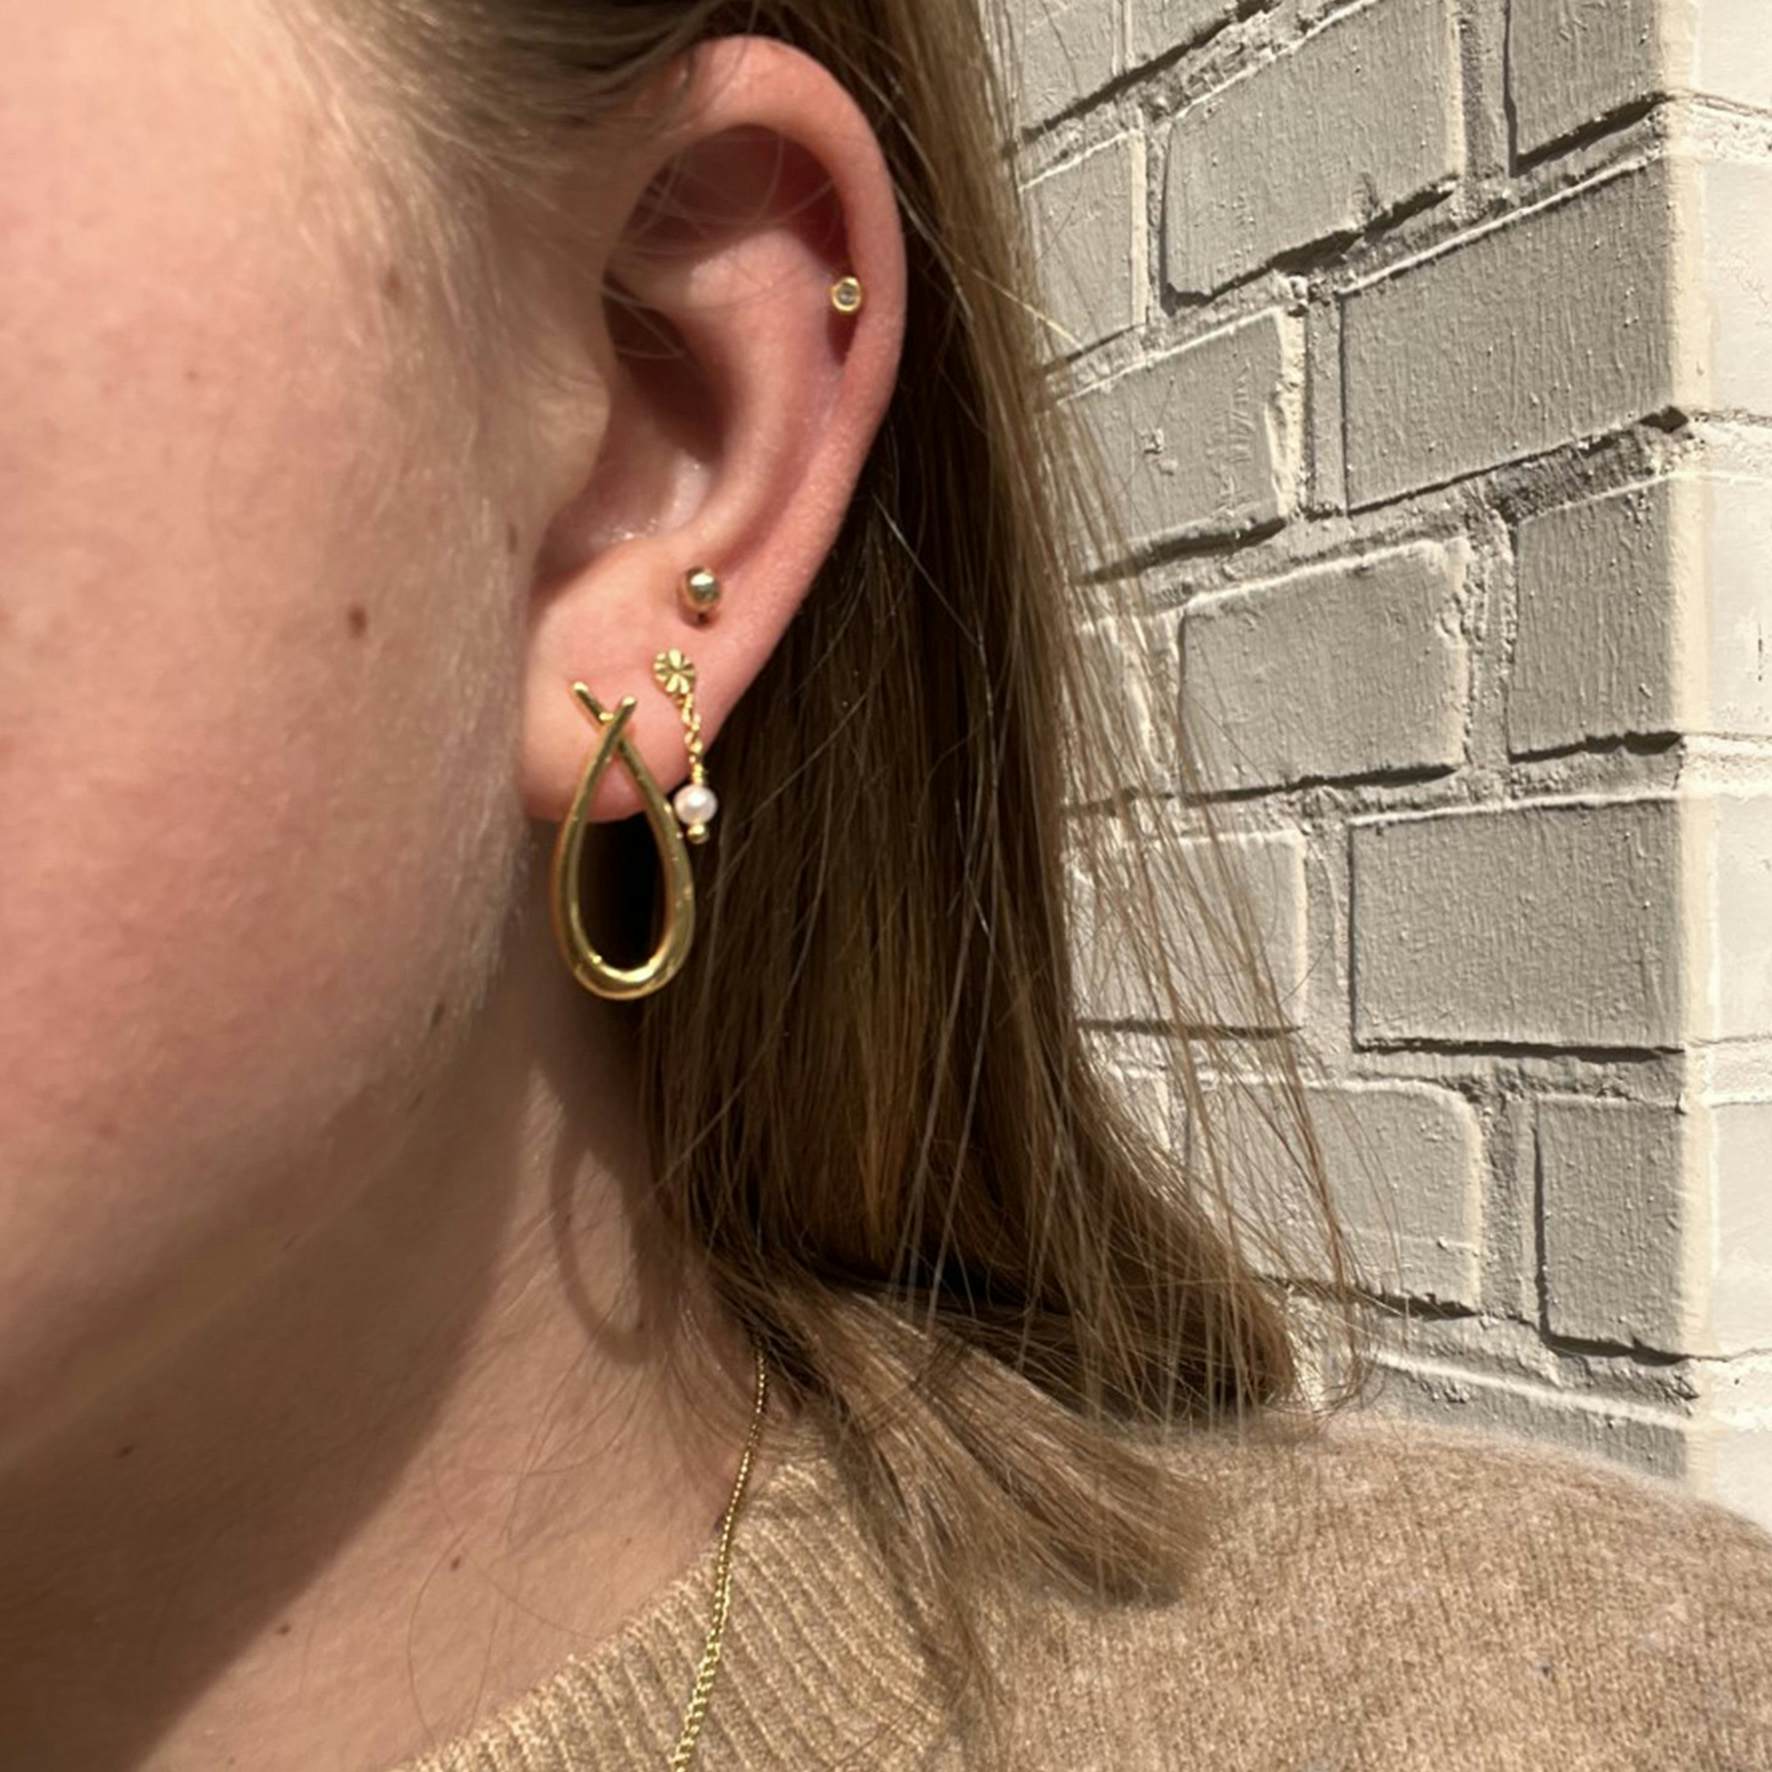 Attitude Medium earrings from Izabel Camille in Silver Sterling 925